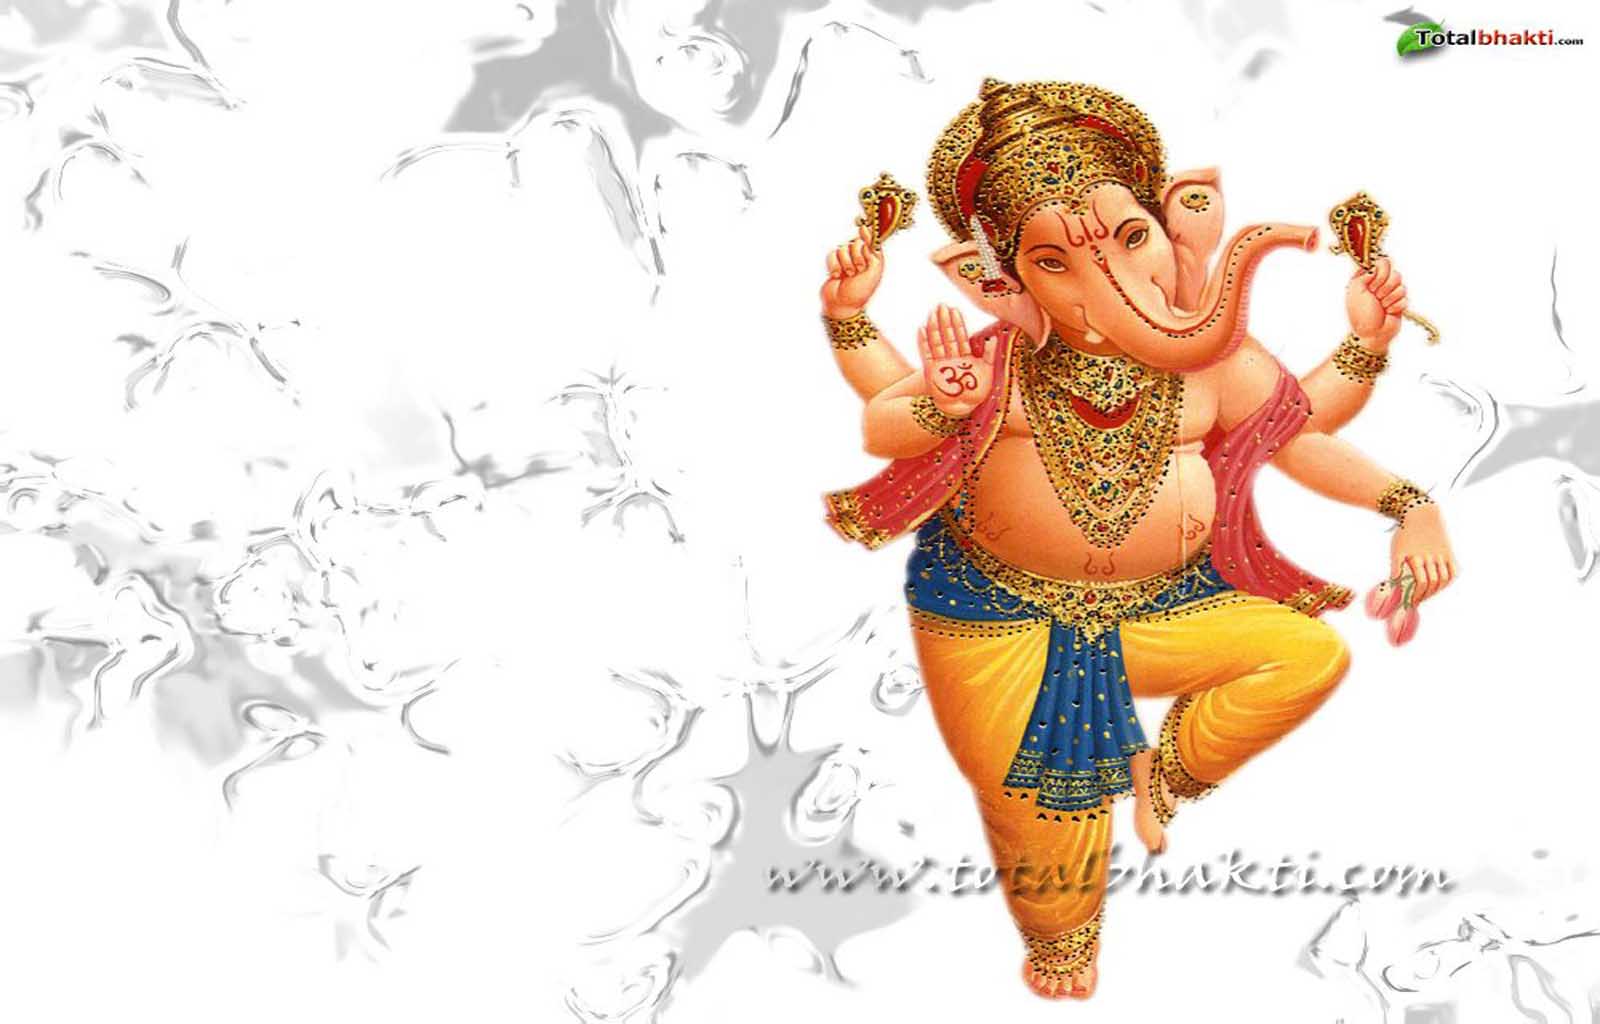 File:Ganesh Photo - An image of Dancing Lord Ganesha.jpg - Wikimedia Commons